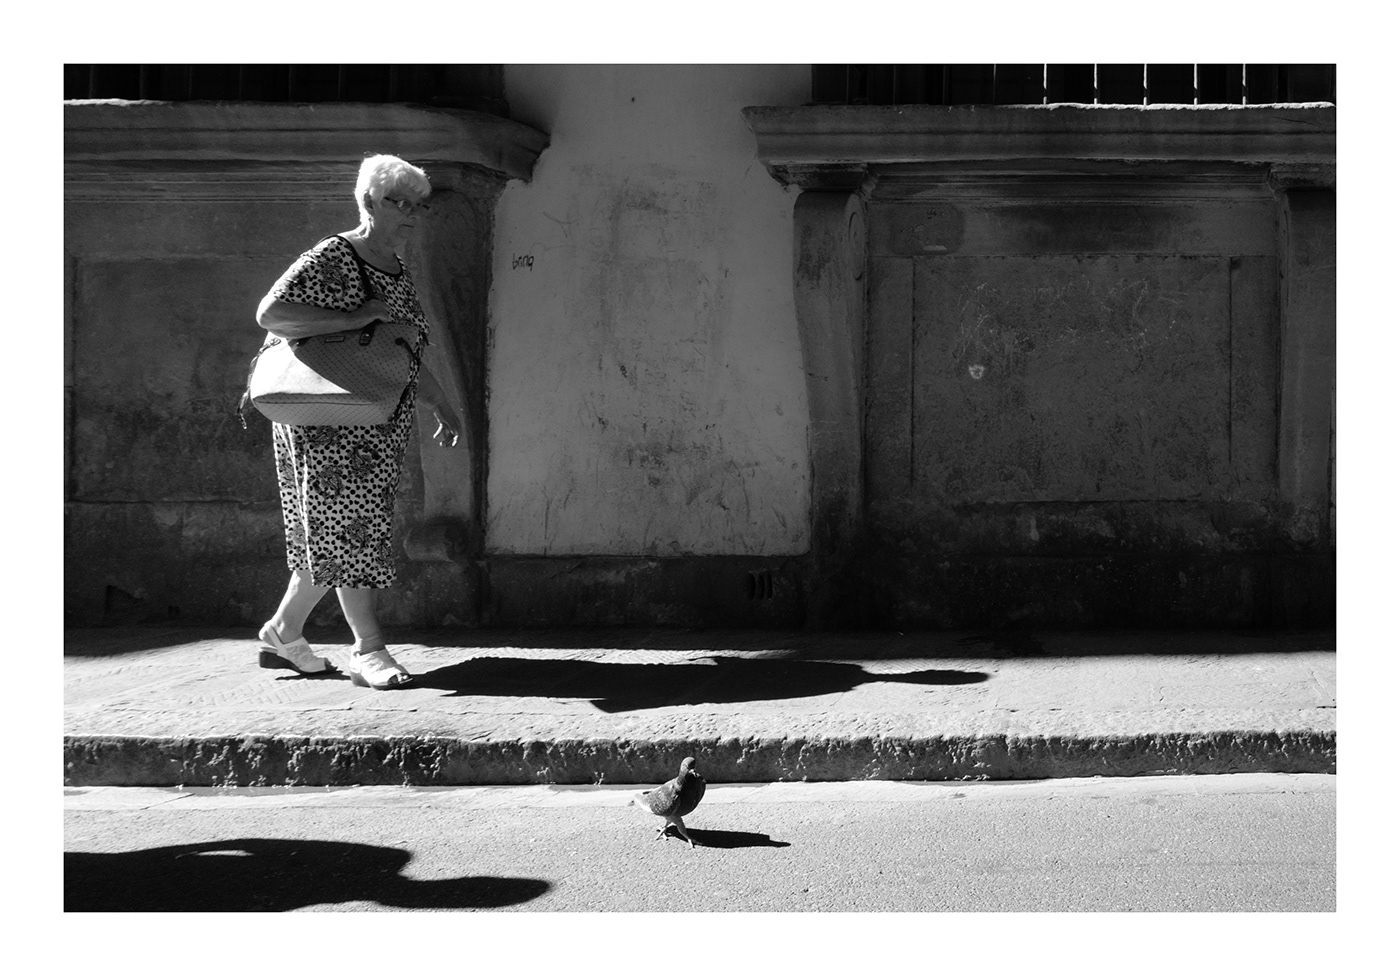 Street street photography black and white monochrome Urban people city Travel